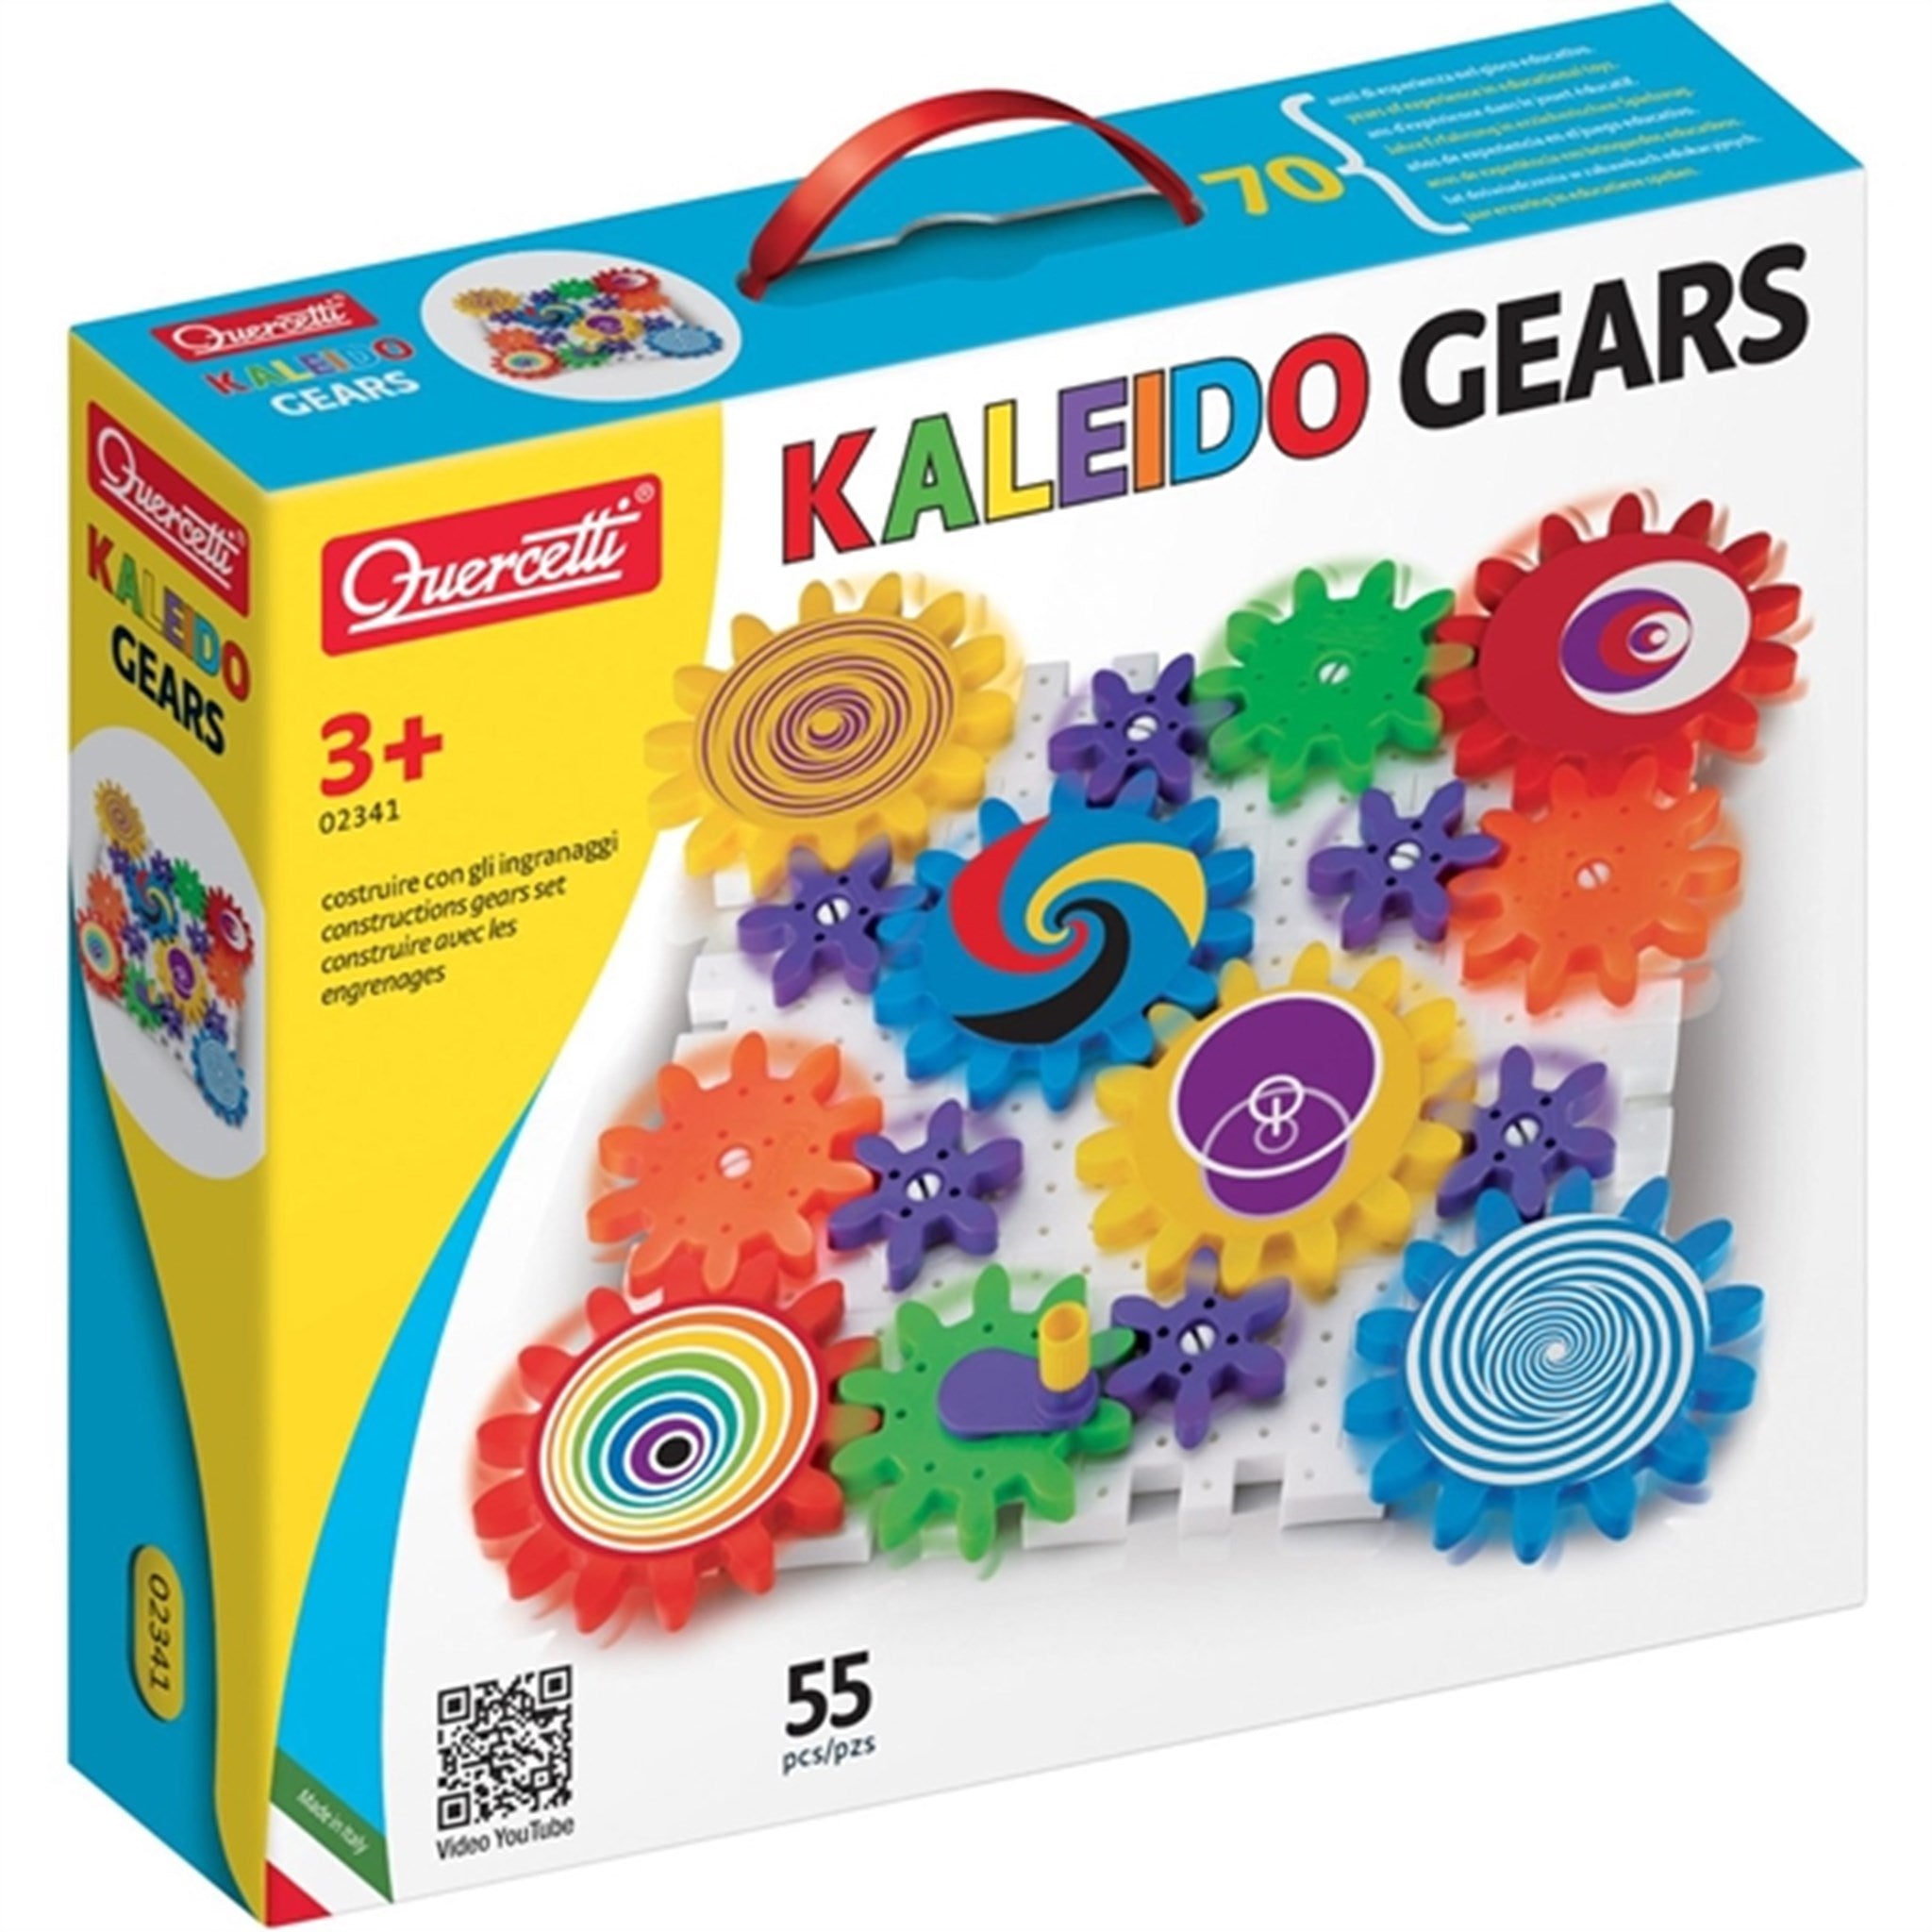 Quercetti Georello Kaleido Gears 拼装套装 - 培养创造力和机械思维的有趣方式